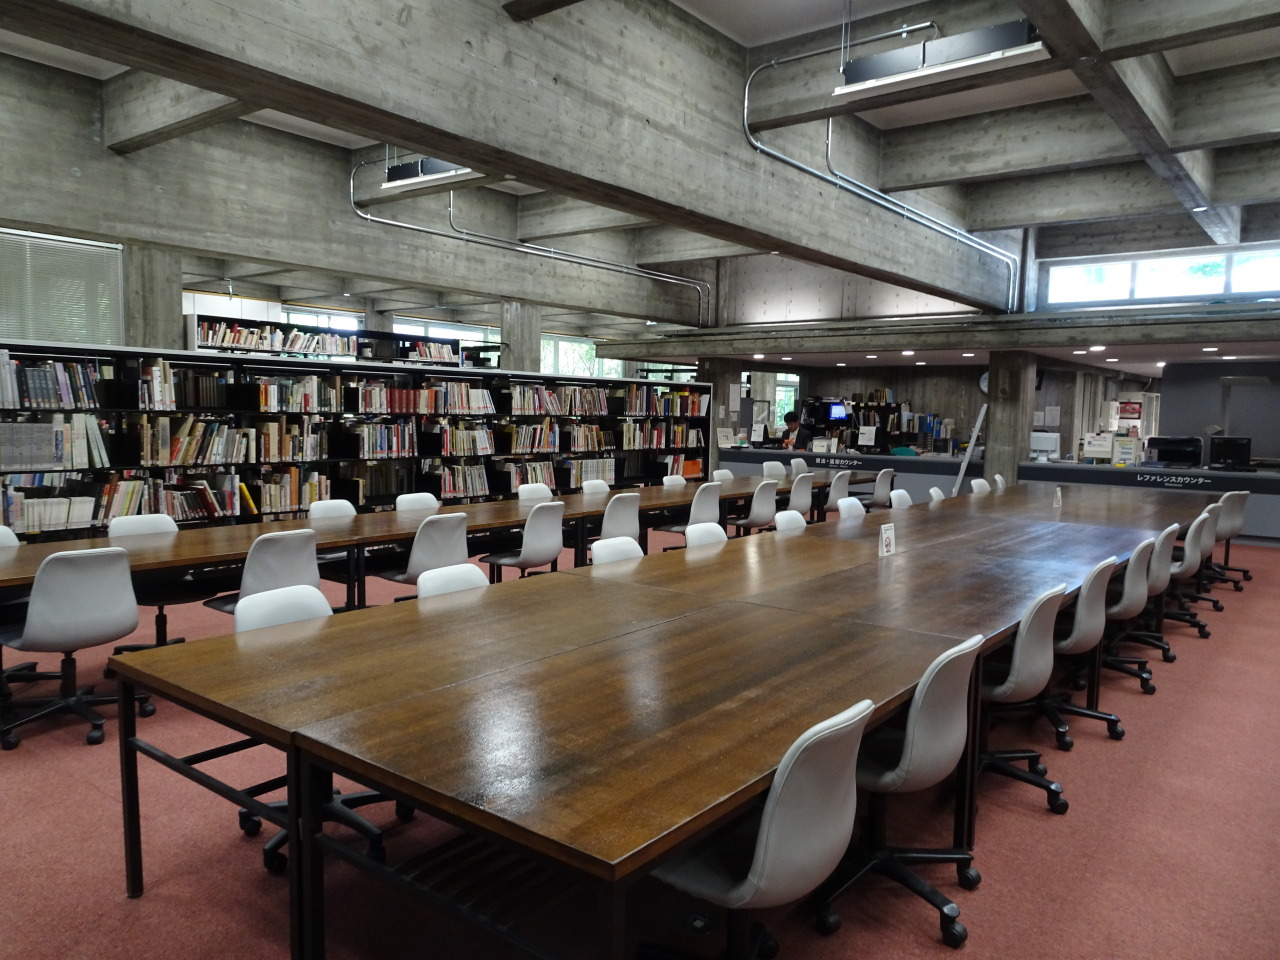 東京藝術大学附属図書館 図書館座席を語ろう